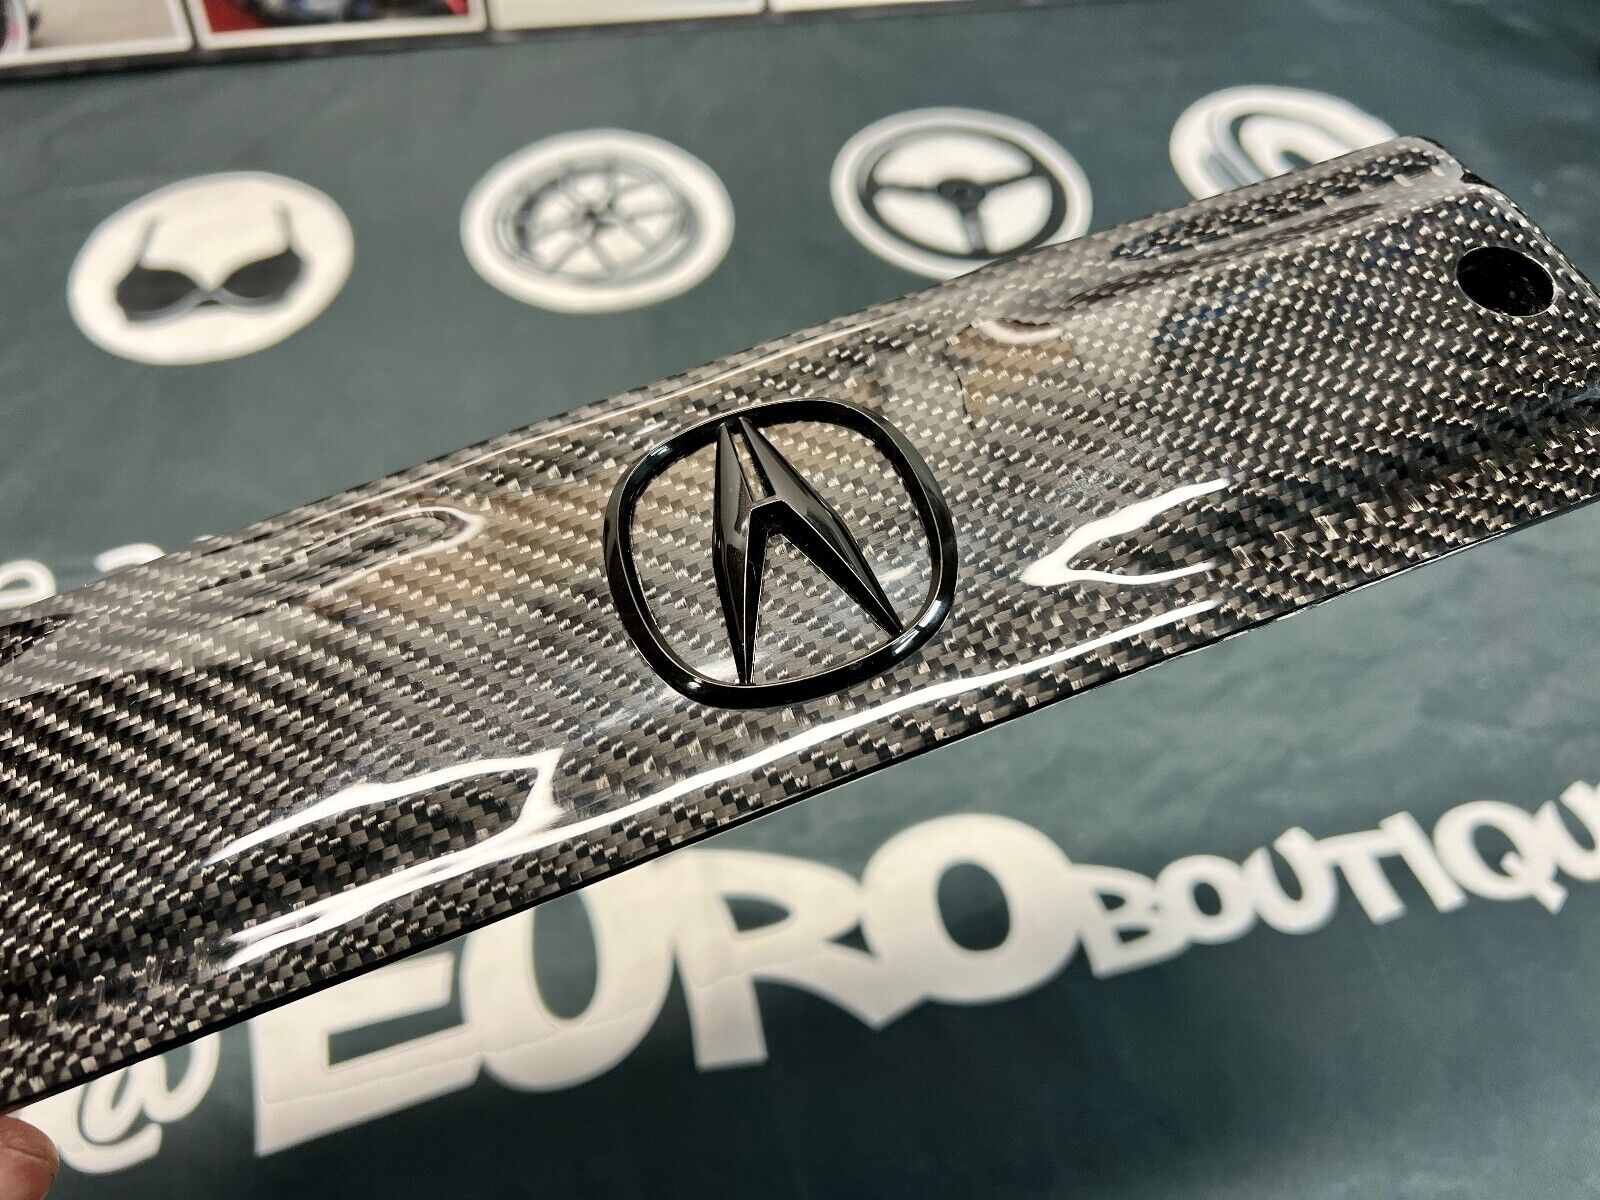 Honda Acura NSX Intake Manifold Cover Plate in Bespoke Carbon Fiber